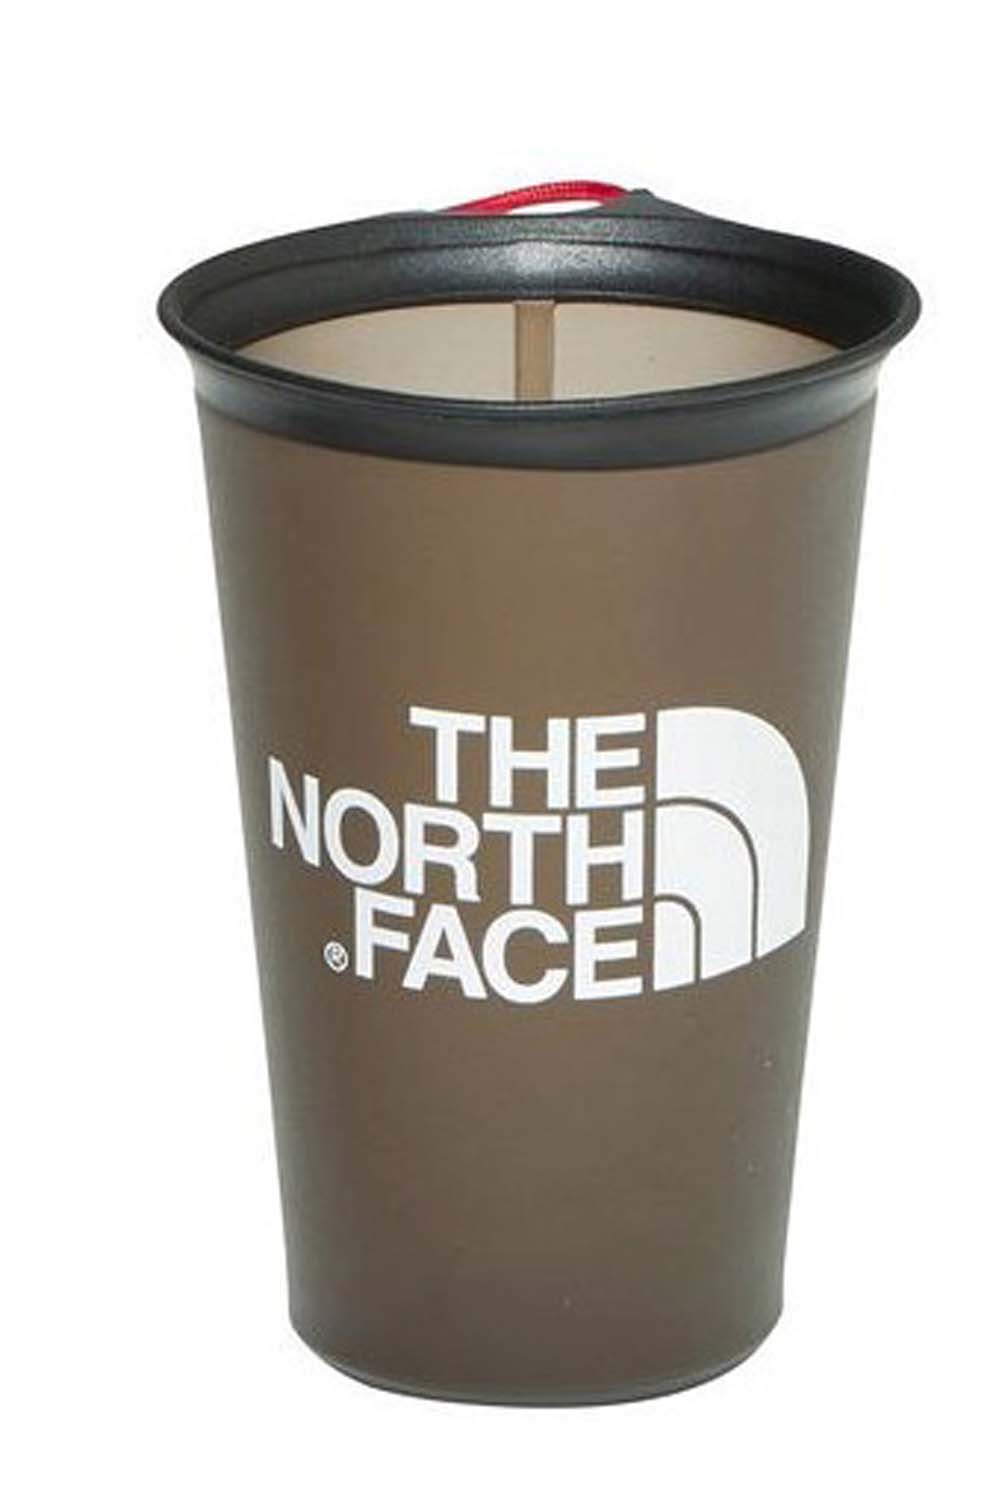  THE　NORTH　FACE ノースフェイス アウトドア ランニングソフトカップ200 Running Soft Cup 200 カップ 軽量 携行 キャンプ フェス NN32368